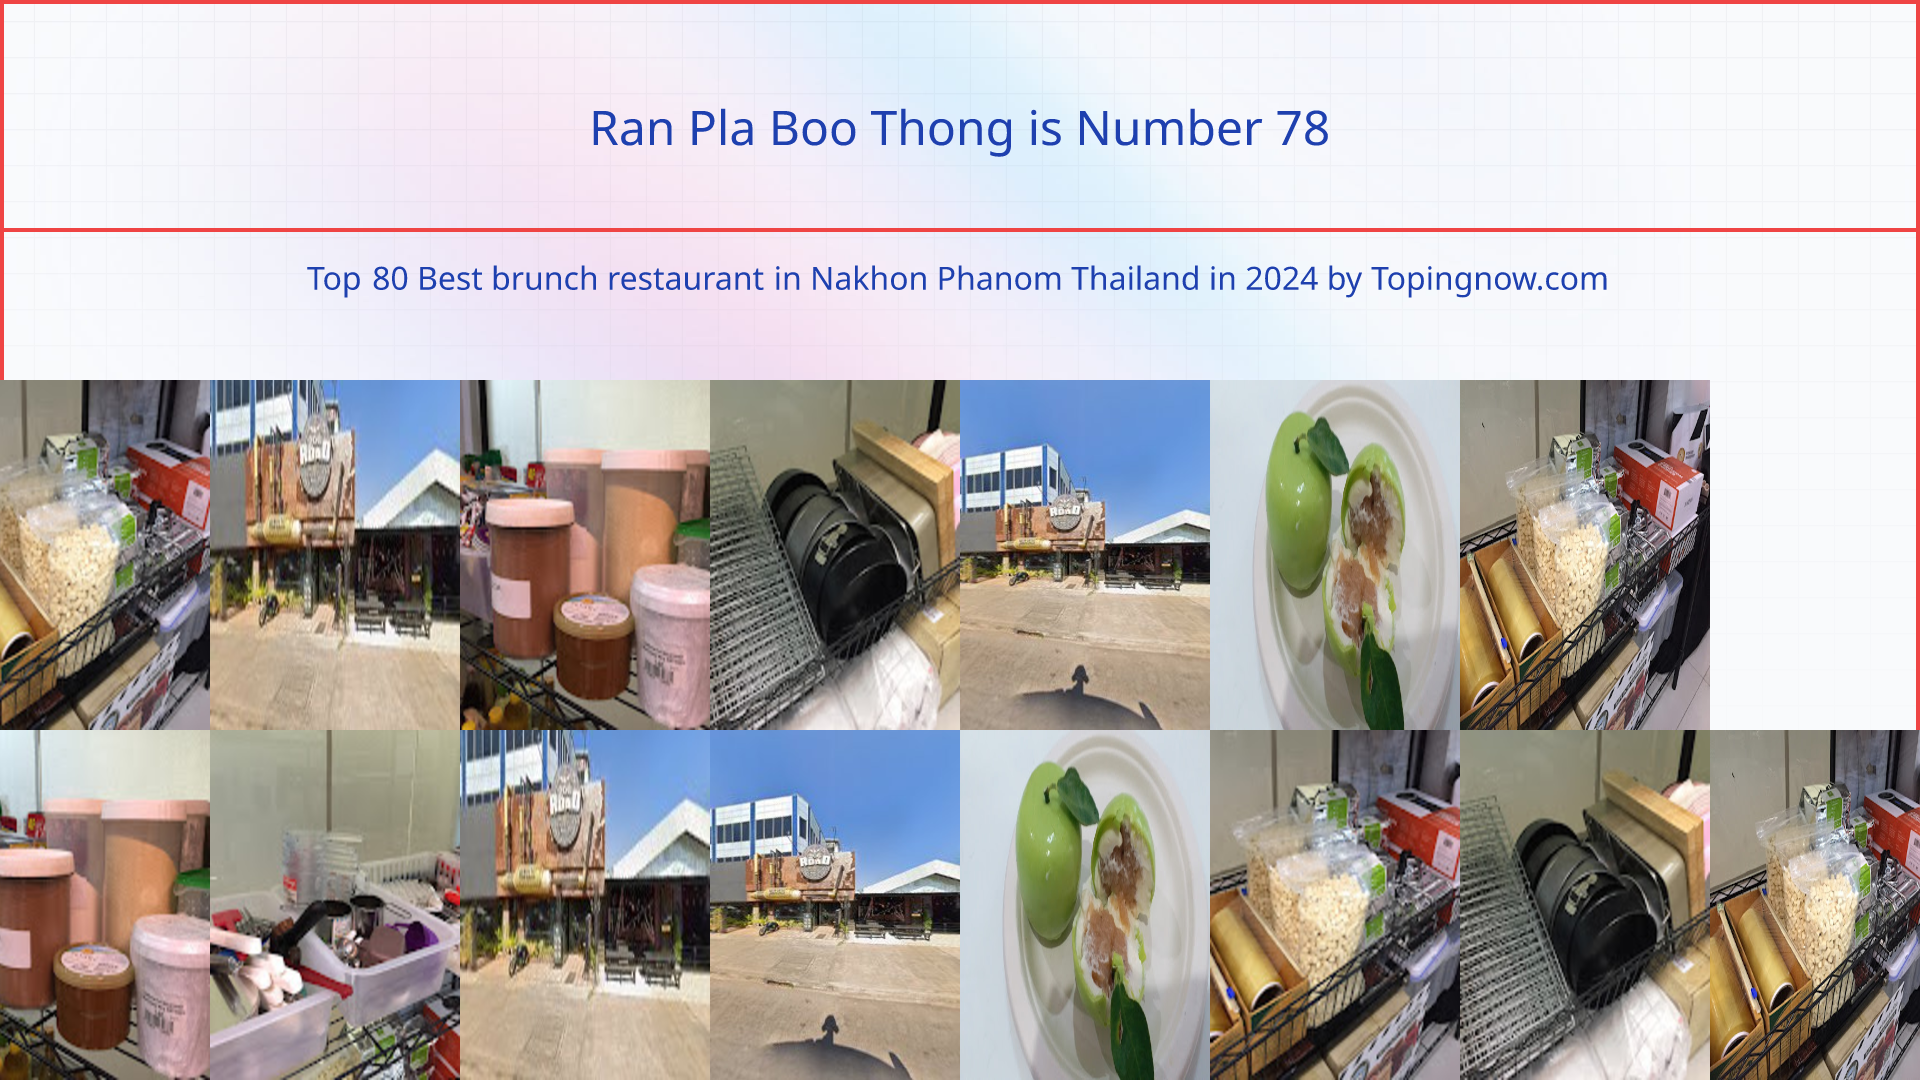 Ran Pla Boo Thong: Top 80 Best brunch restaurant in Nakhon Phanom Thailand in 2024